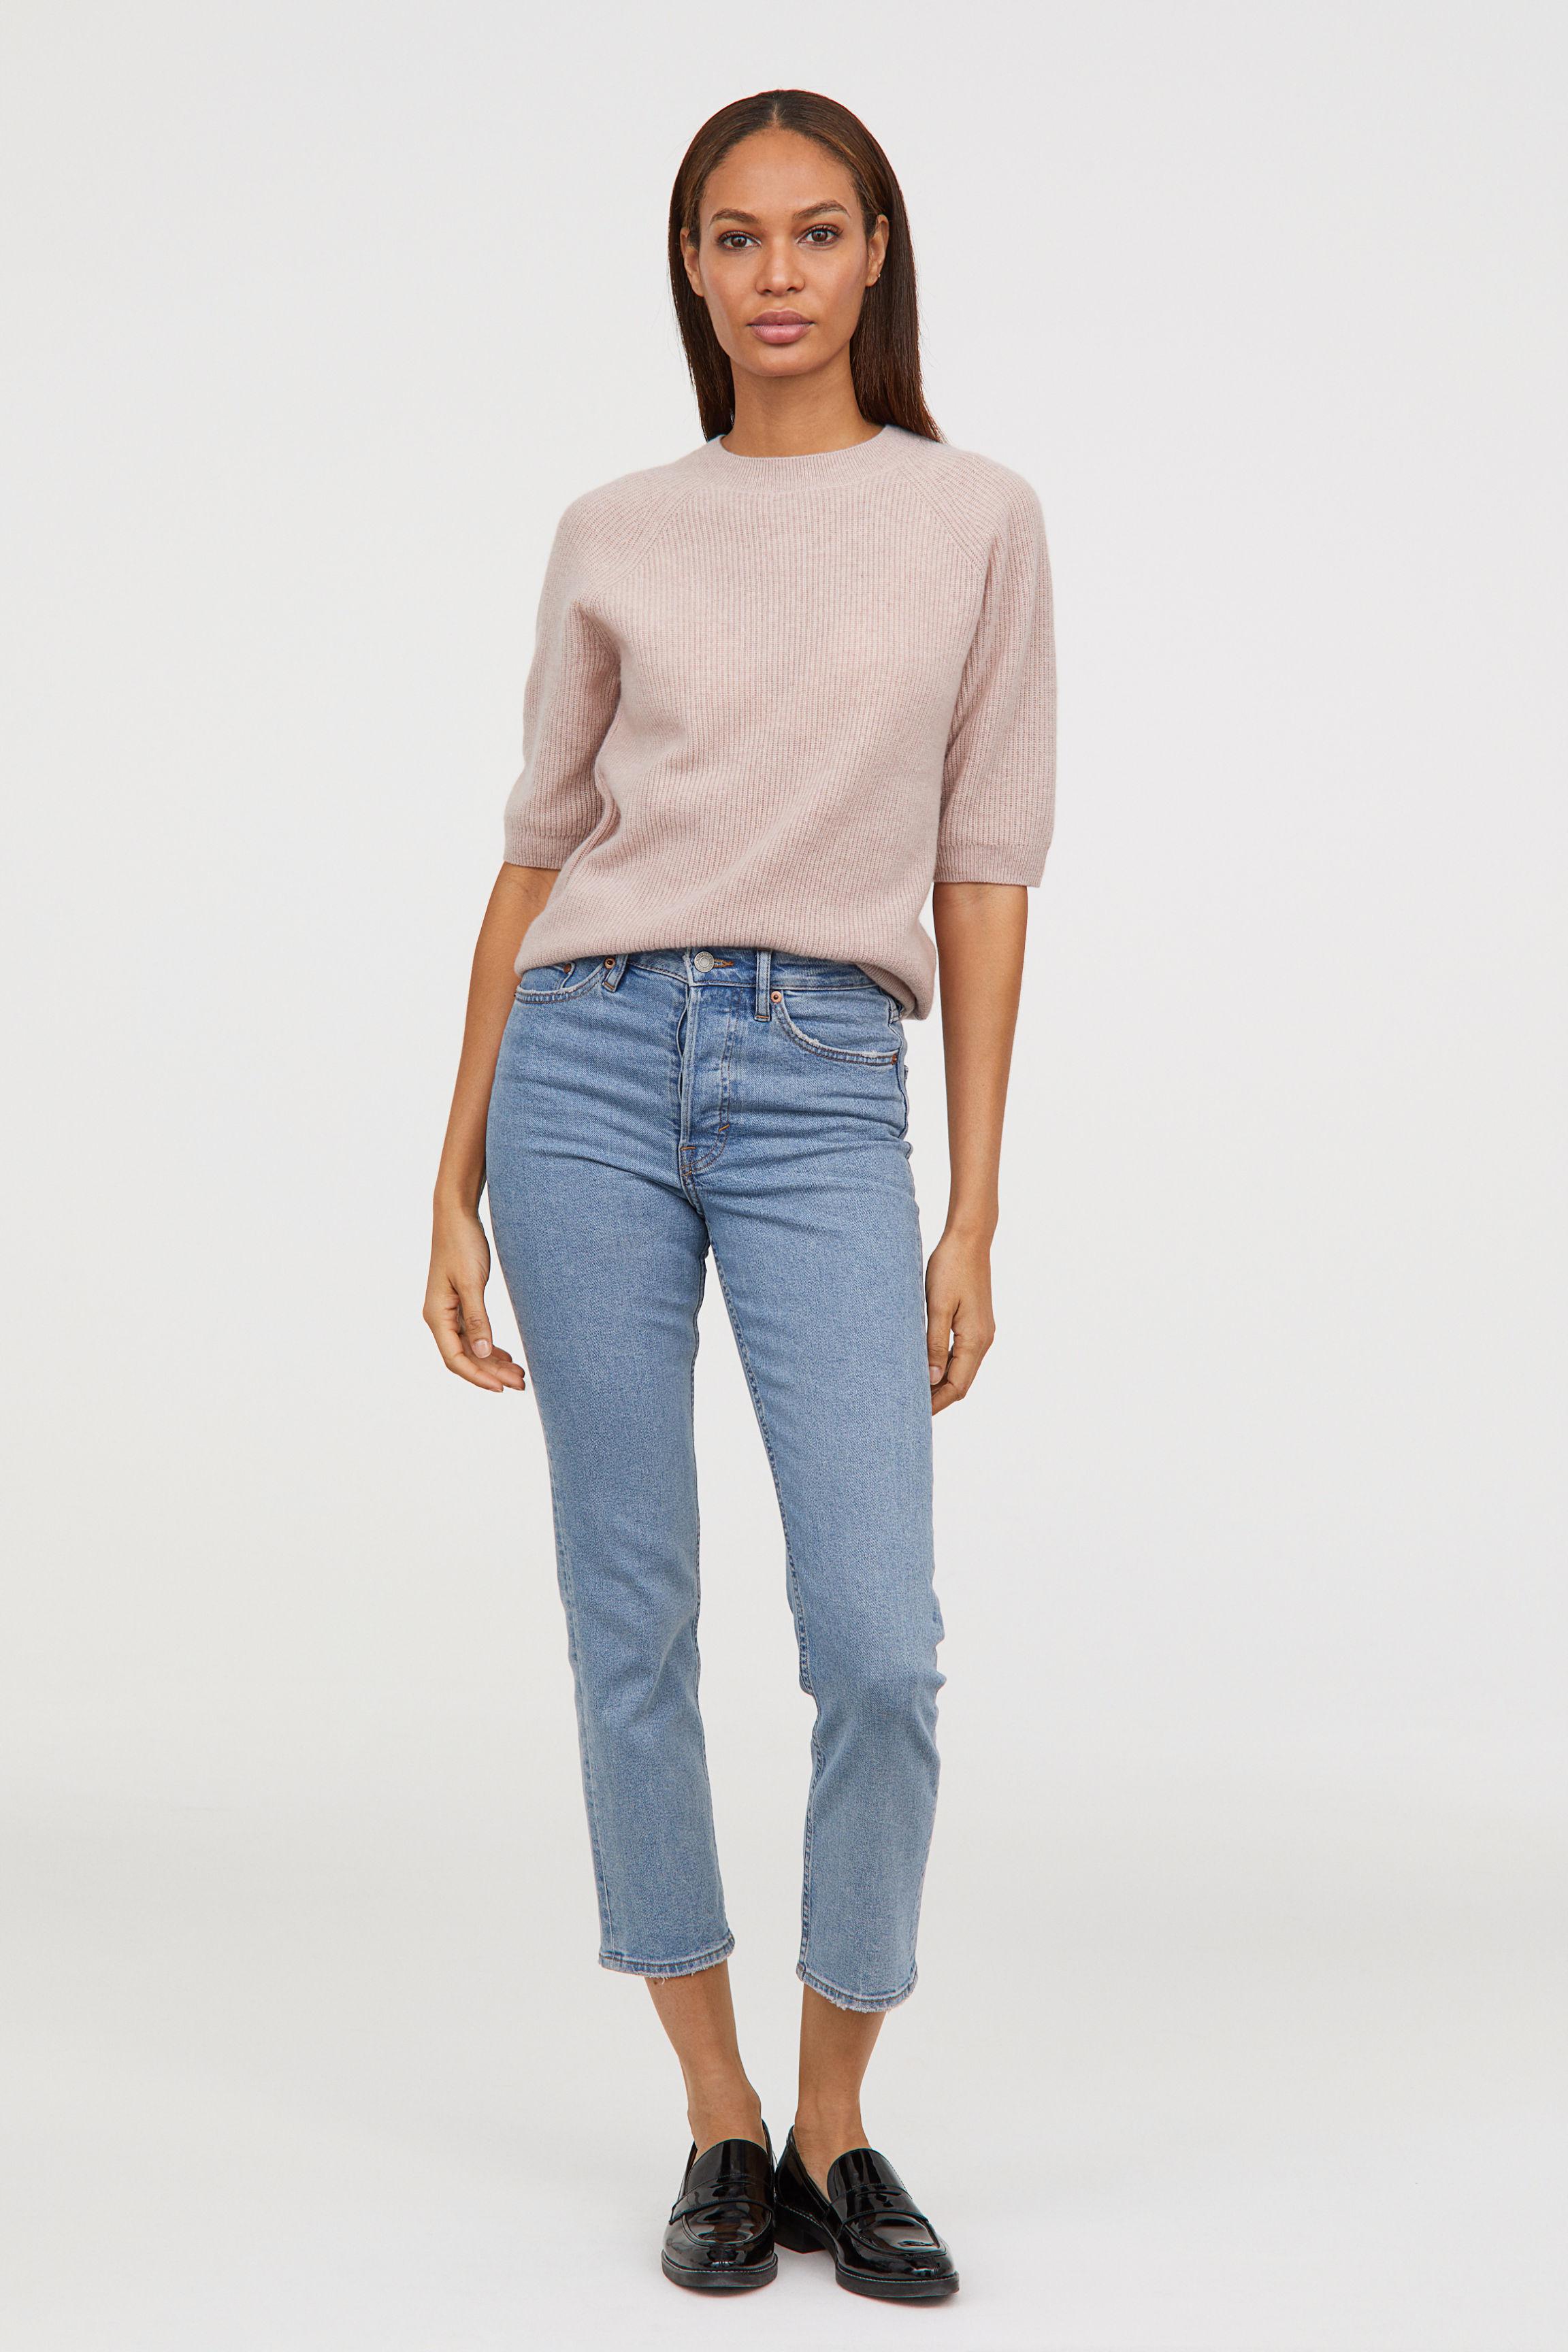 pink shorts grey sweater